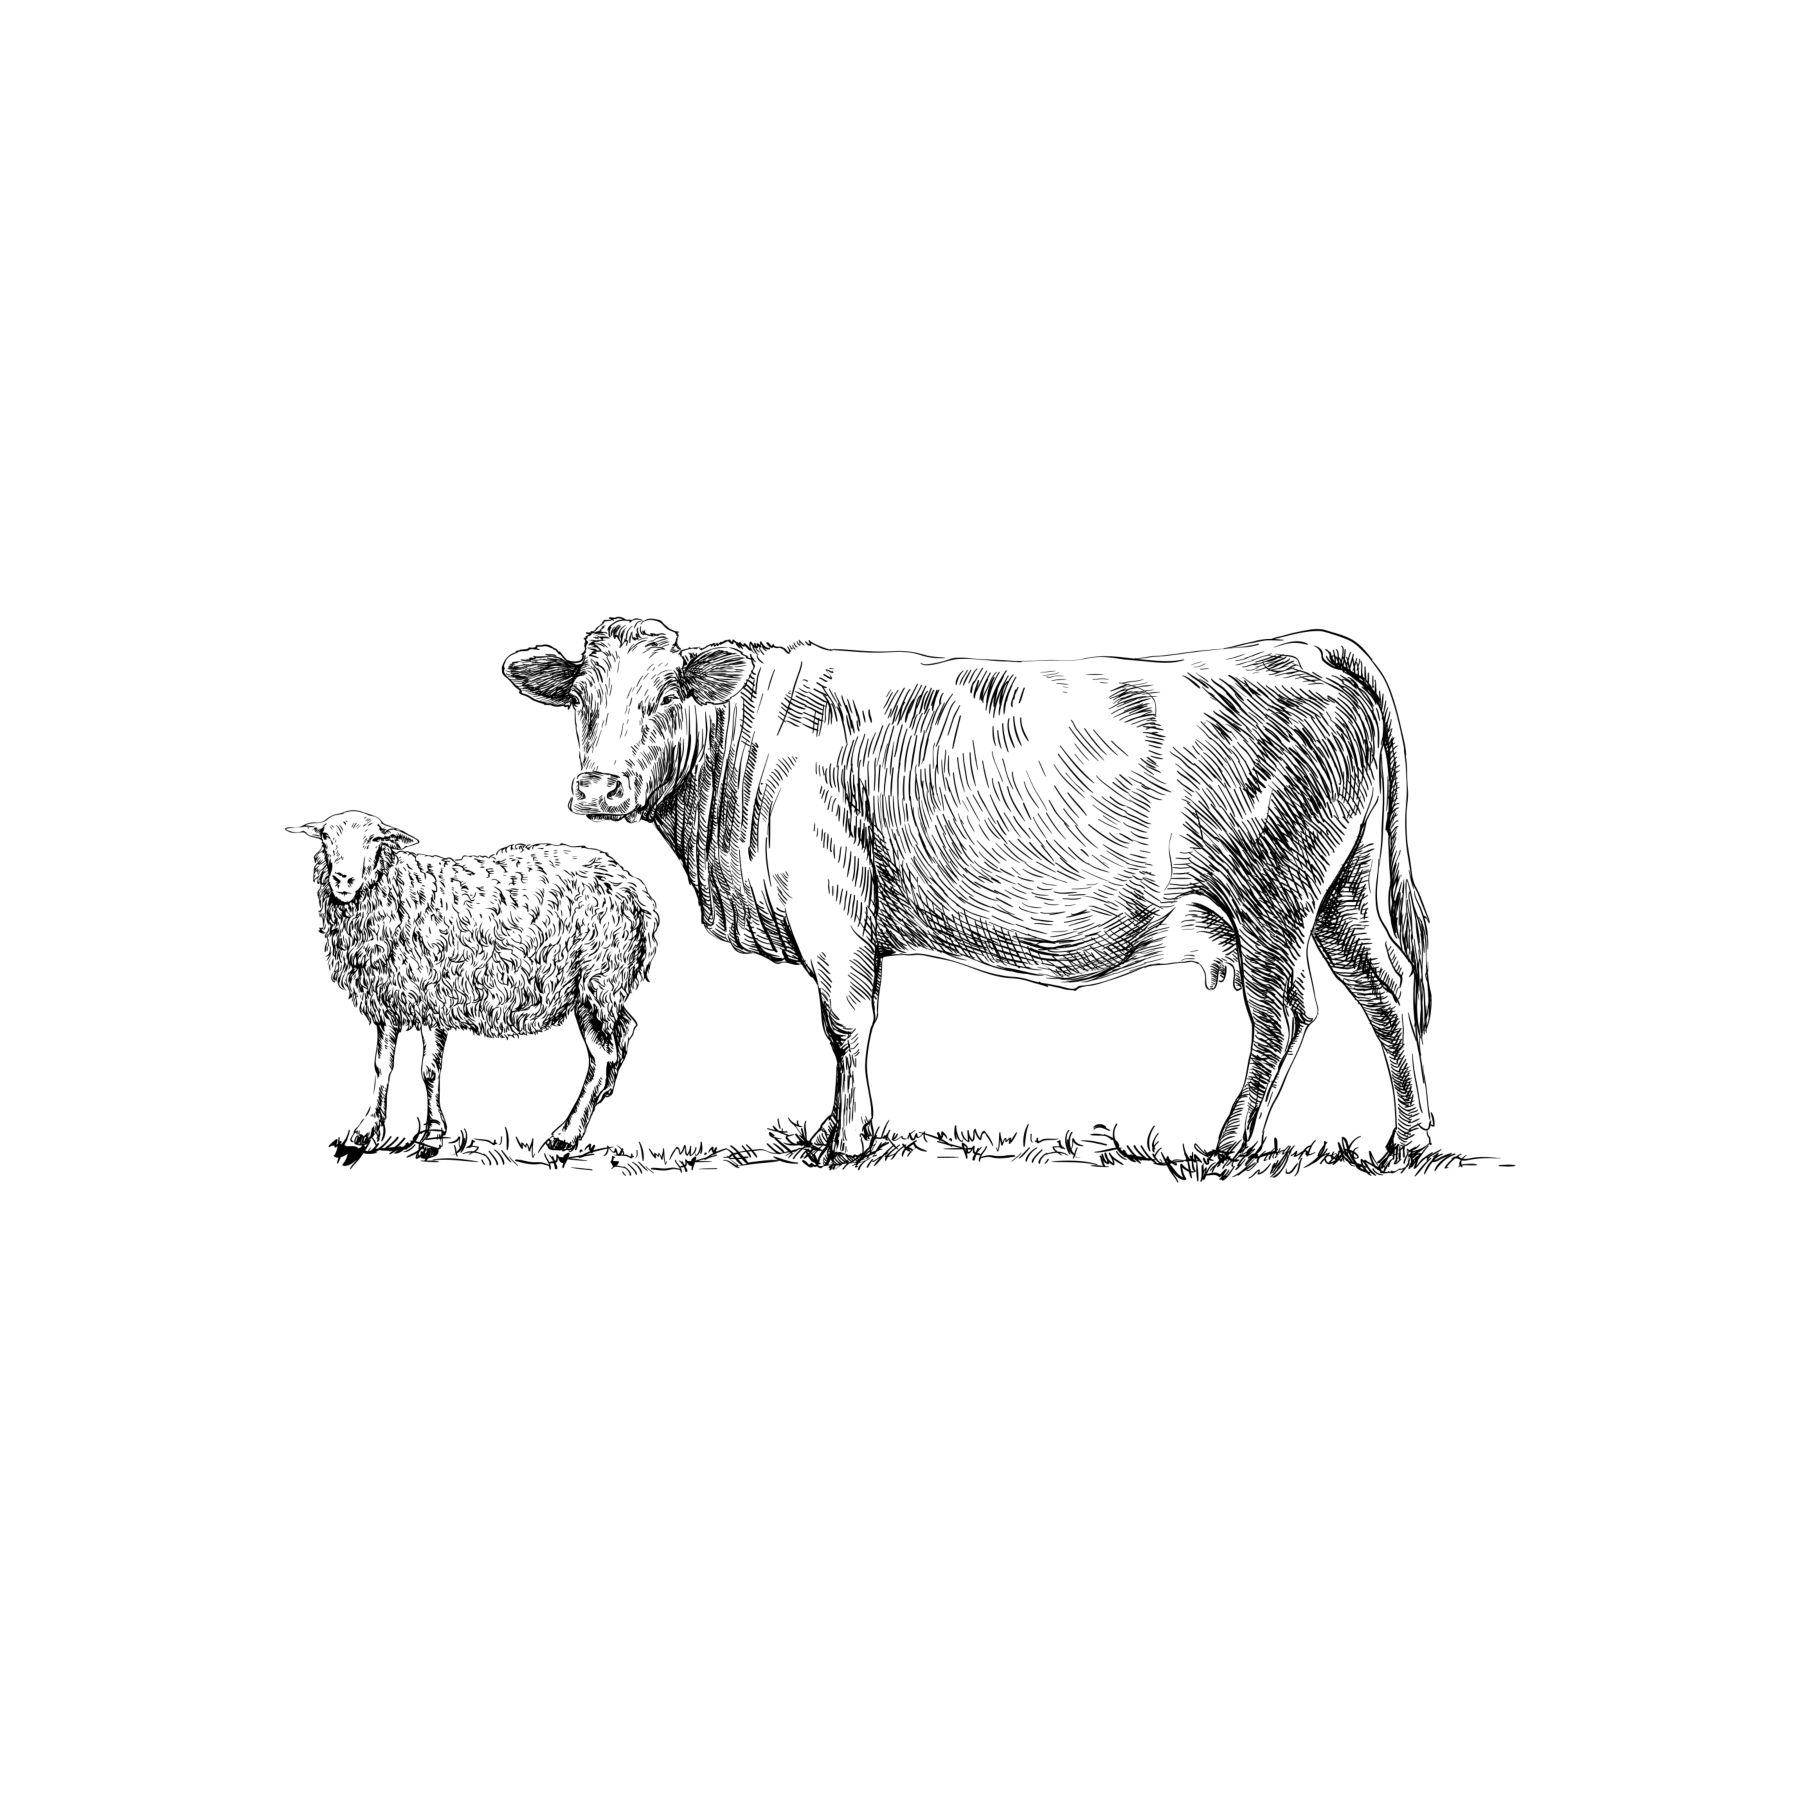 Ruminants sketched